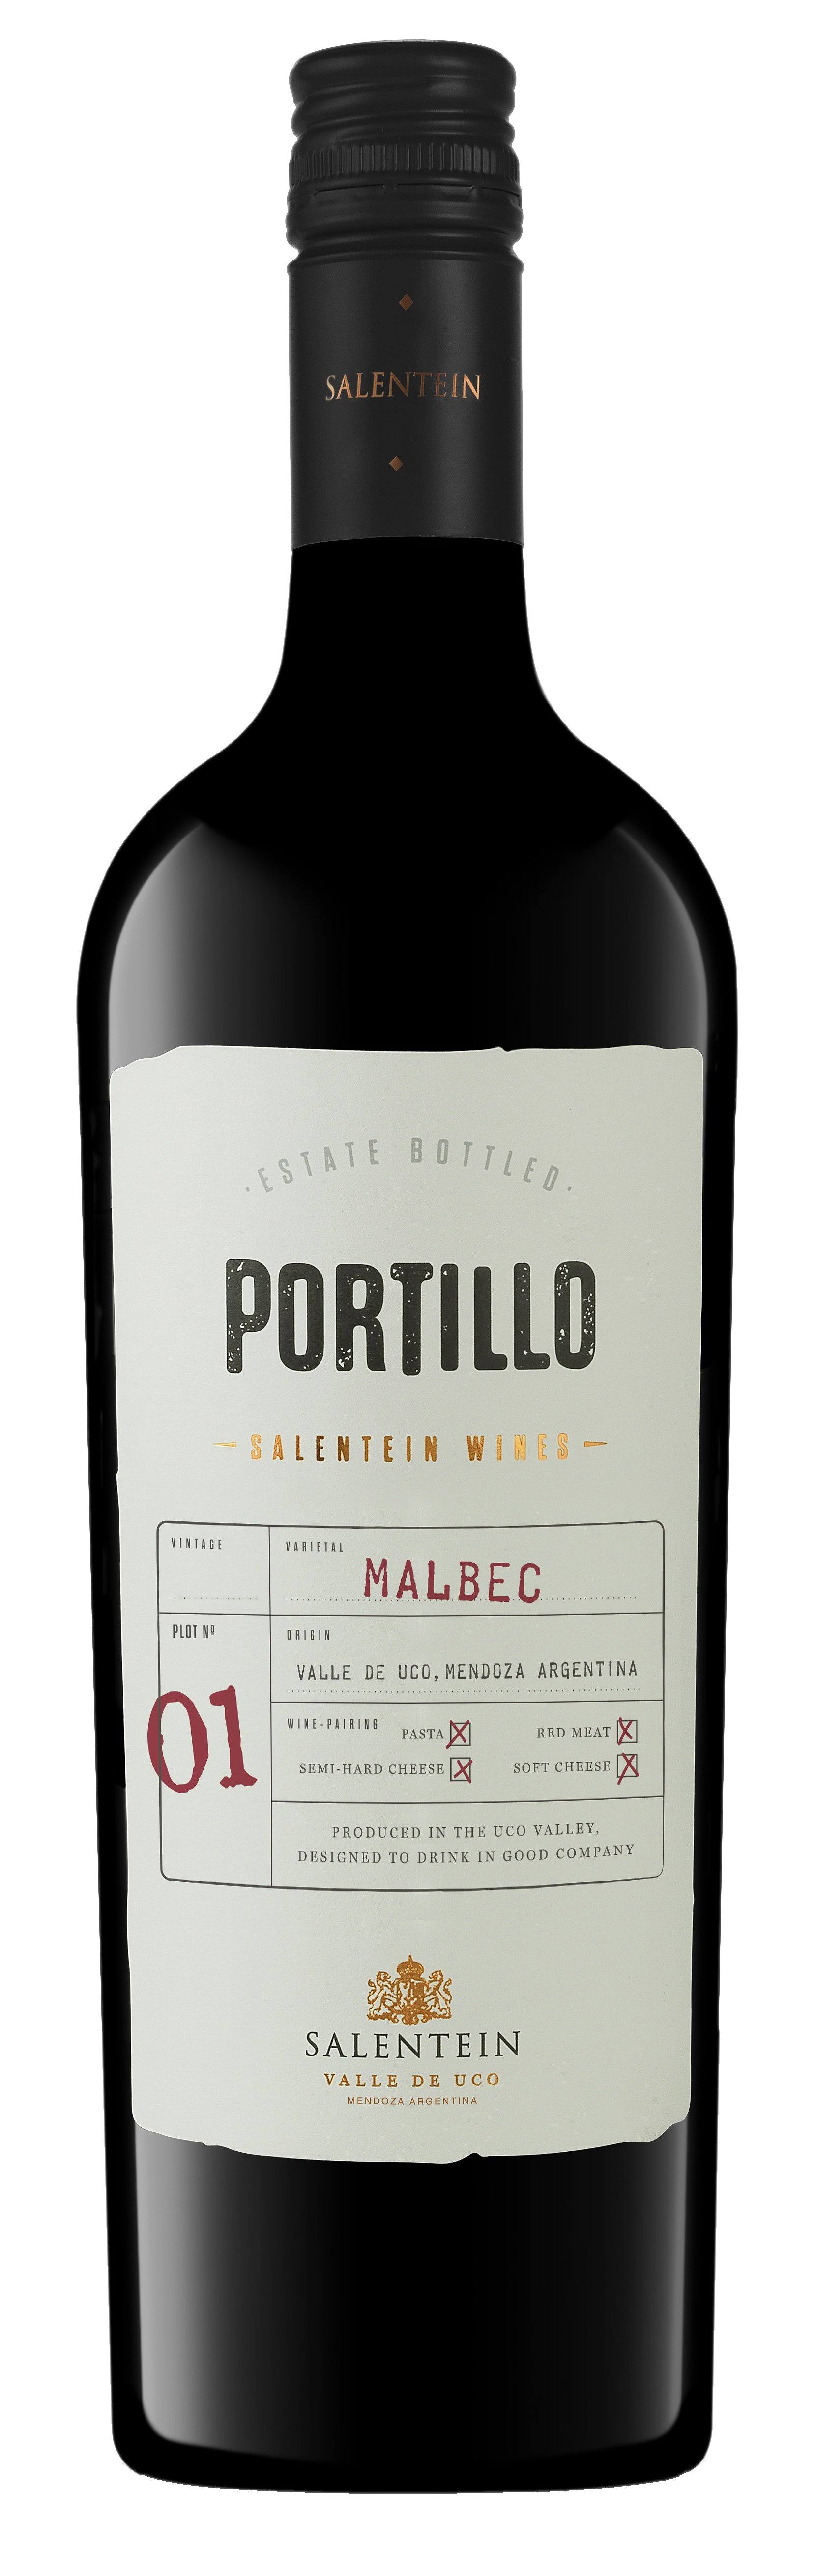 Salentein Malbec, Portillo, Valle De Uco Mendoza Argentina - 750 ml